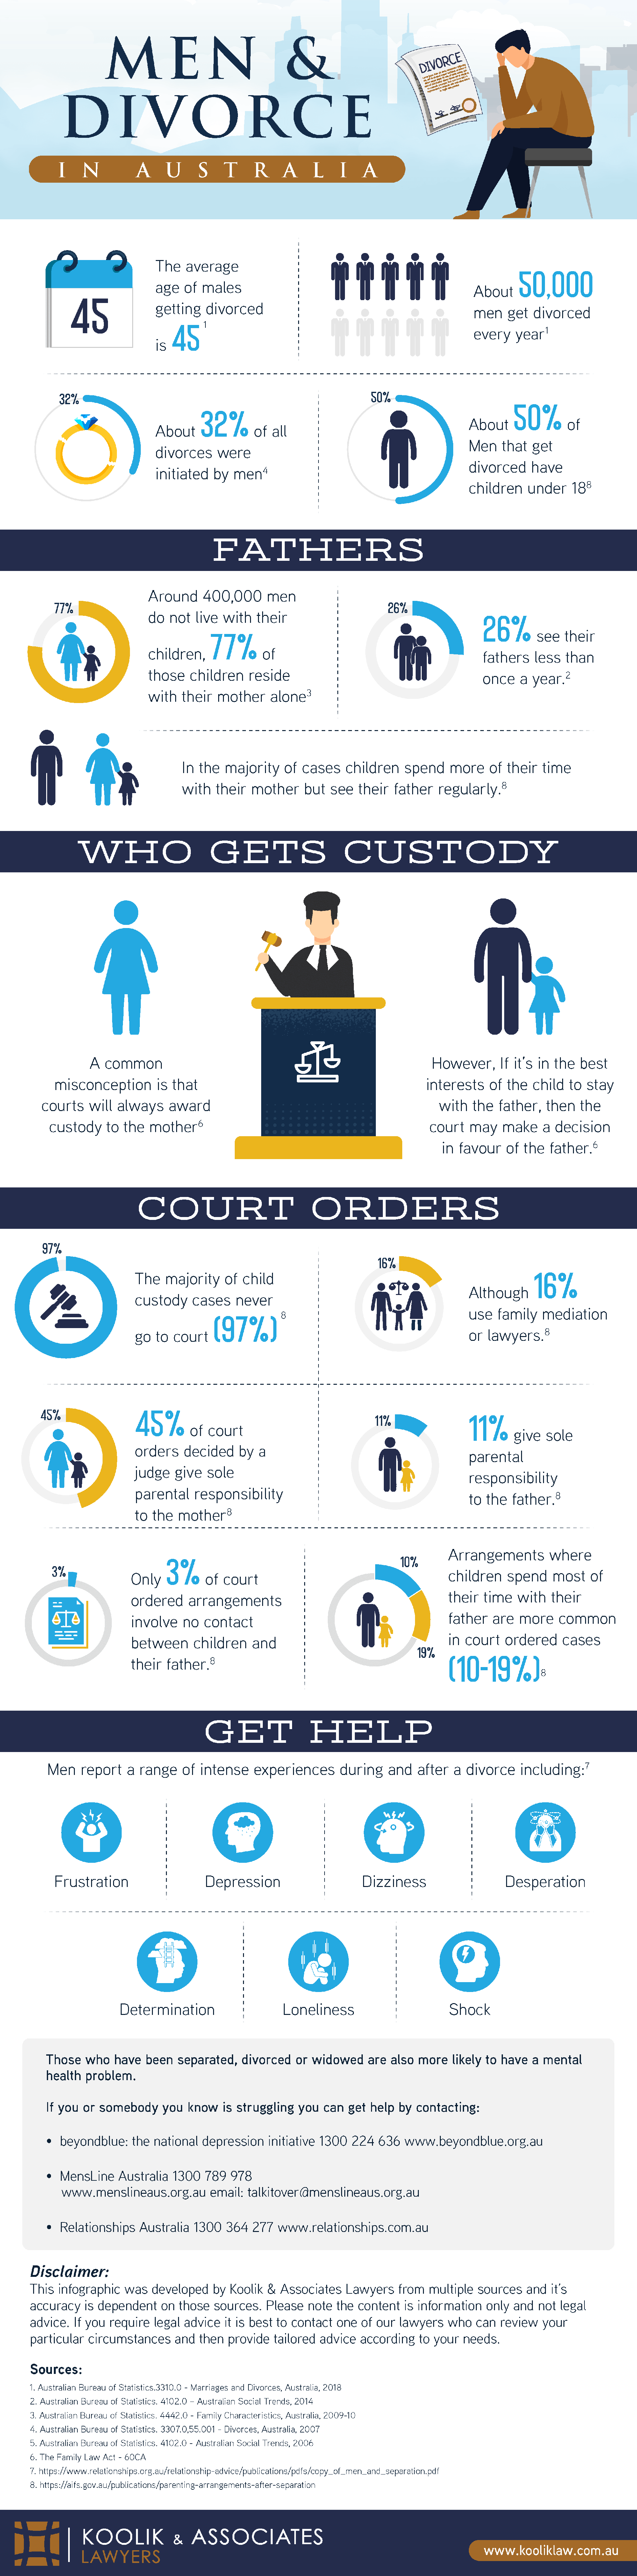 Men & Divorce in Australia